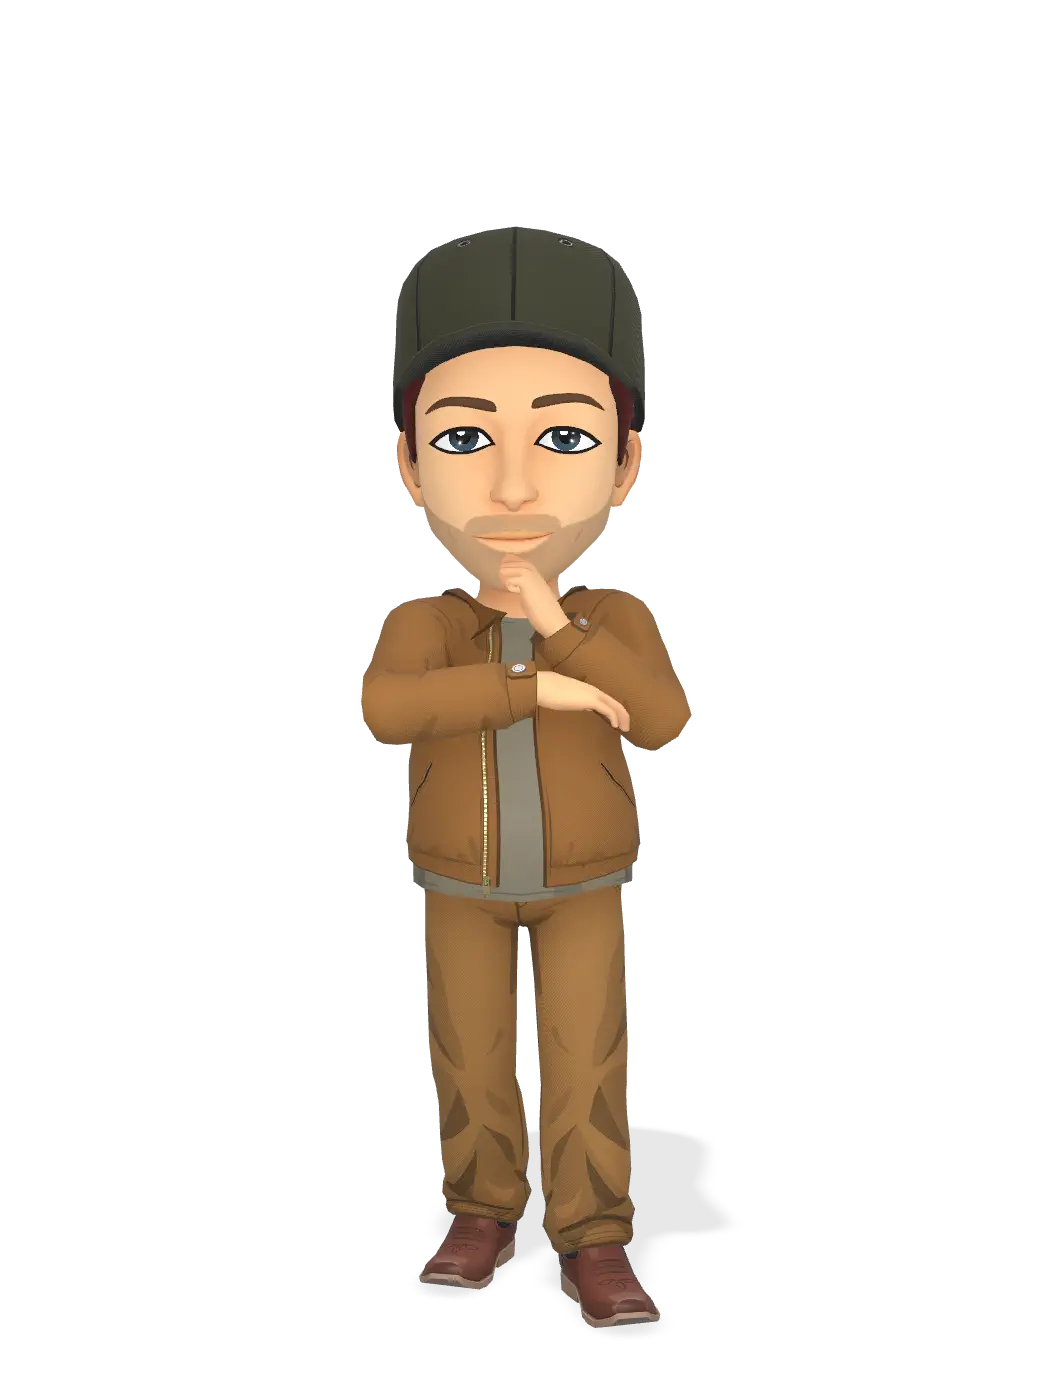 3D Bitmoji for jimithegreat avatar